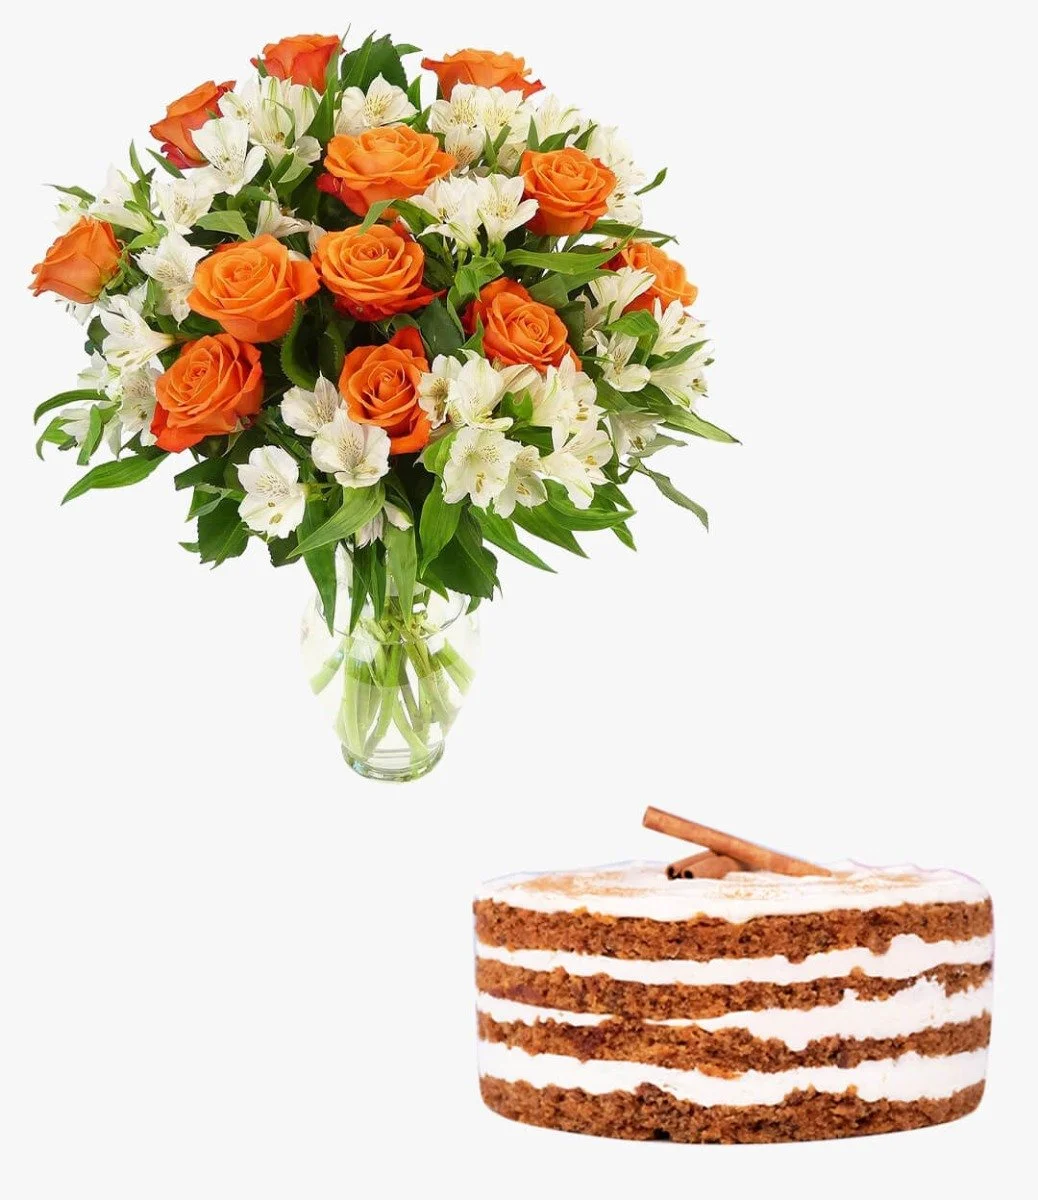 Carrot Cake & Flowers Gift Bundle